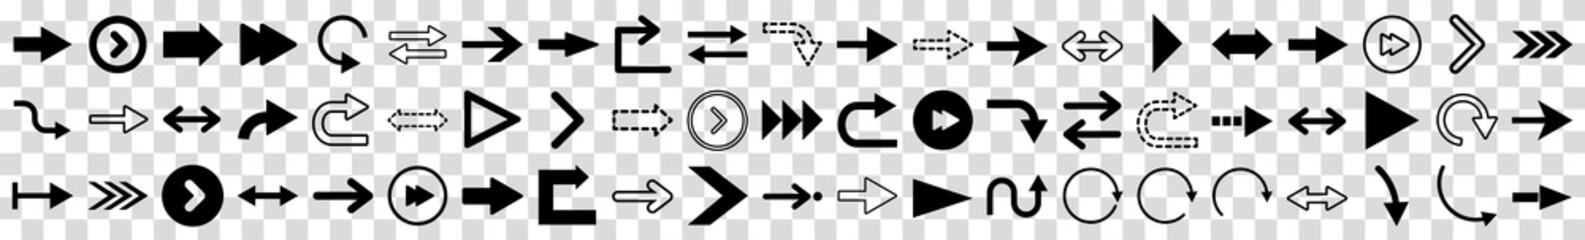 Arrow Icons Set Transparent | Arrow Vector Illustration Set | Arrow Collection | Isolated Icon